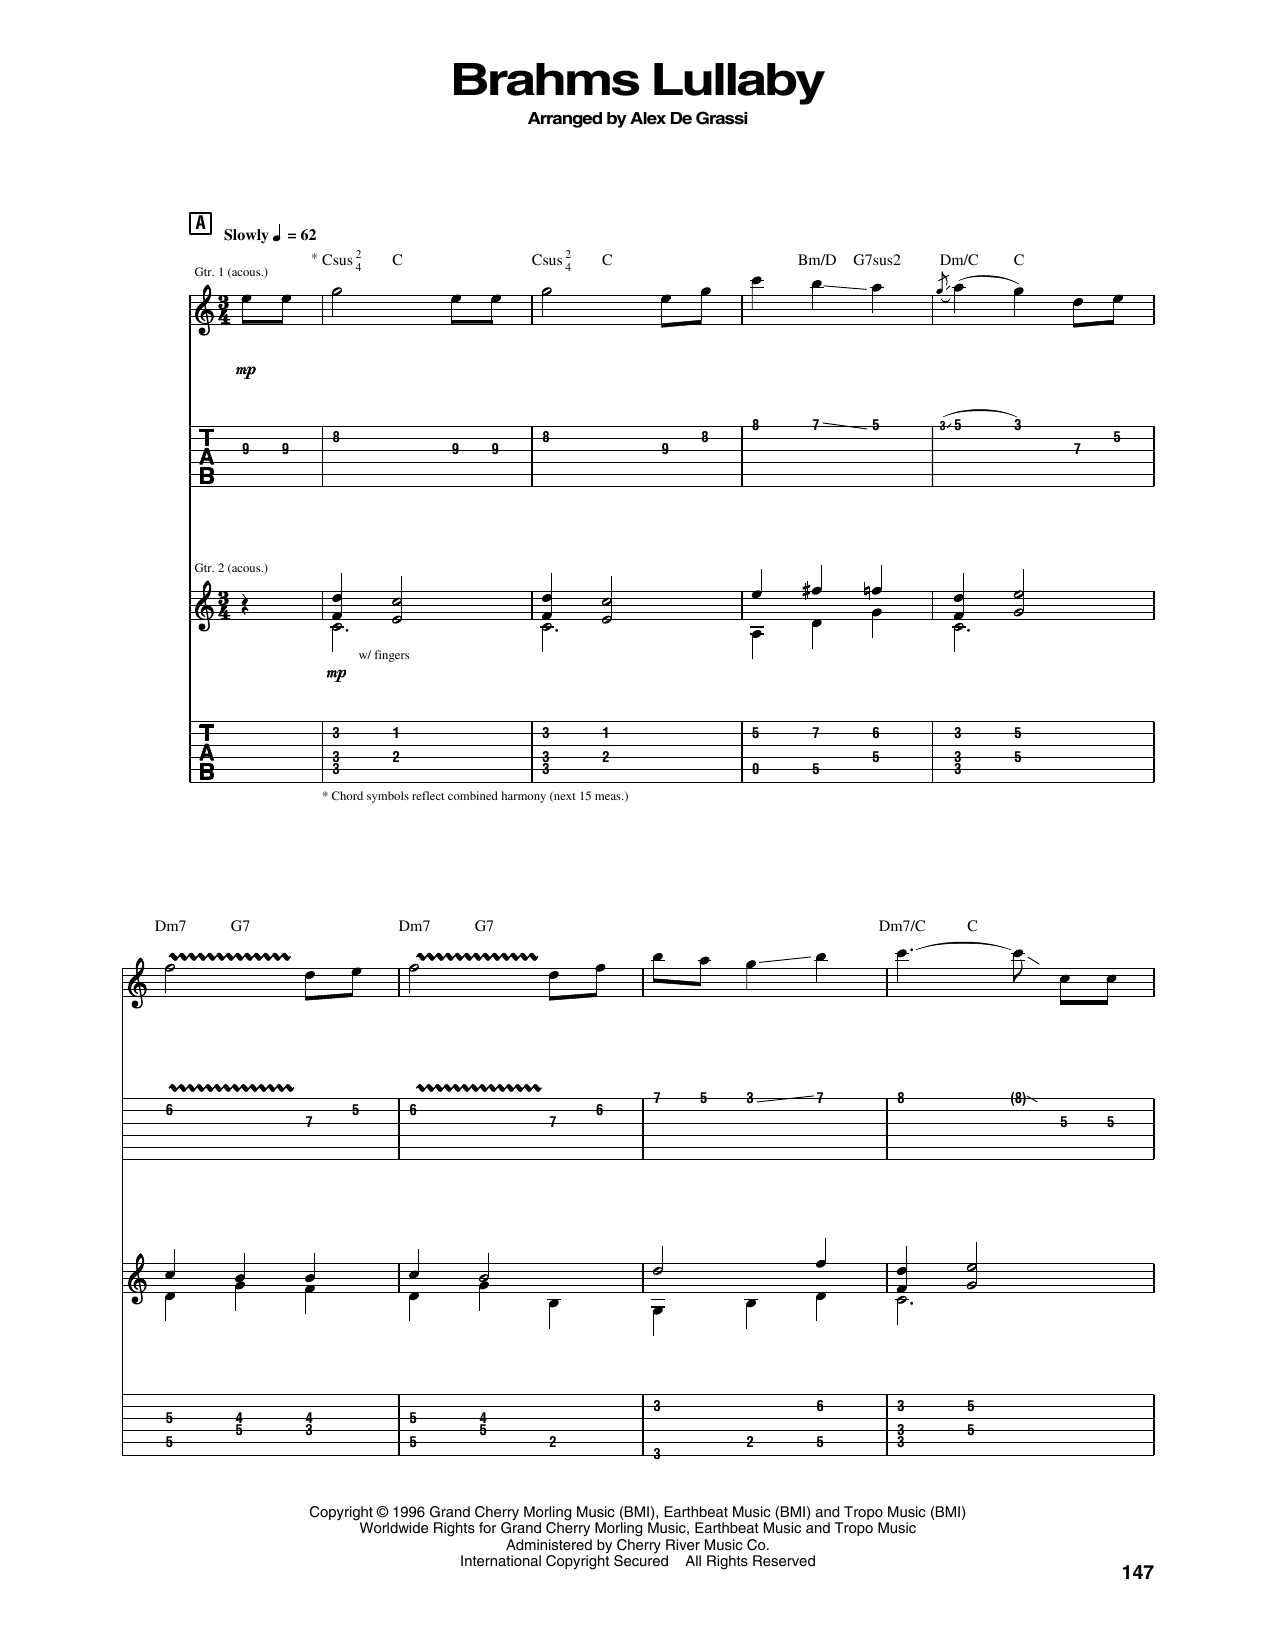 Alex de Grassi Brahms Lullaby Sheet Music Notes & Chords for Guitar Tab - Download or Print PDF